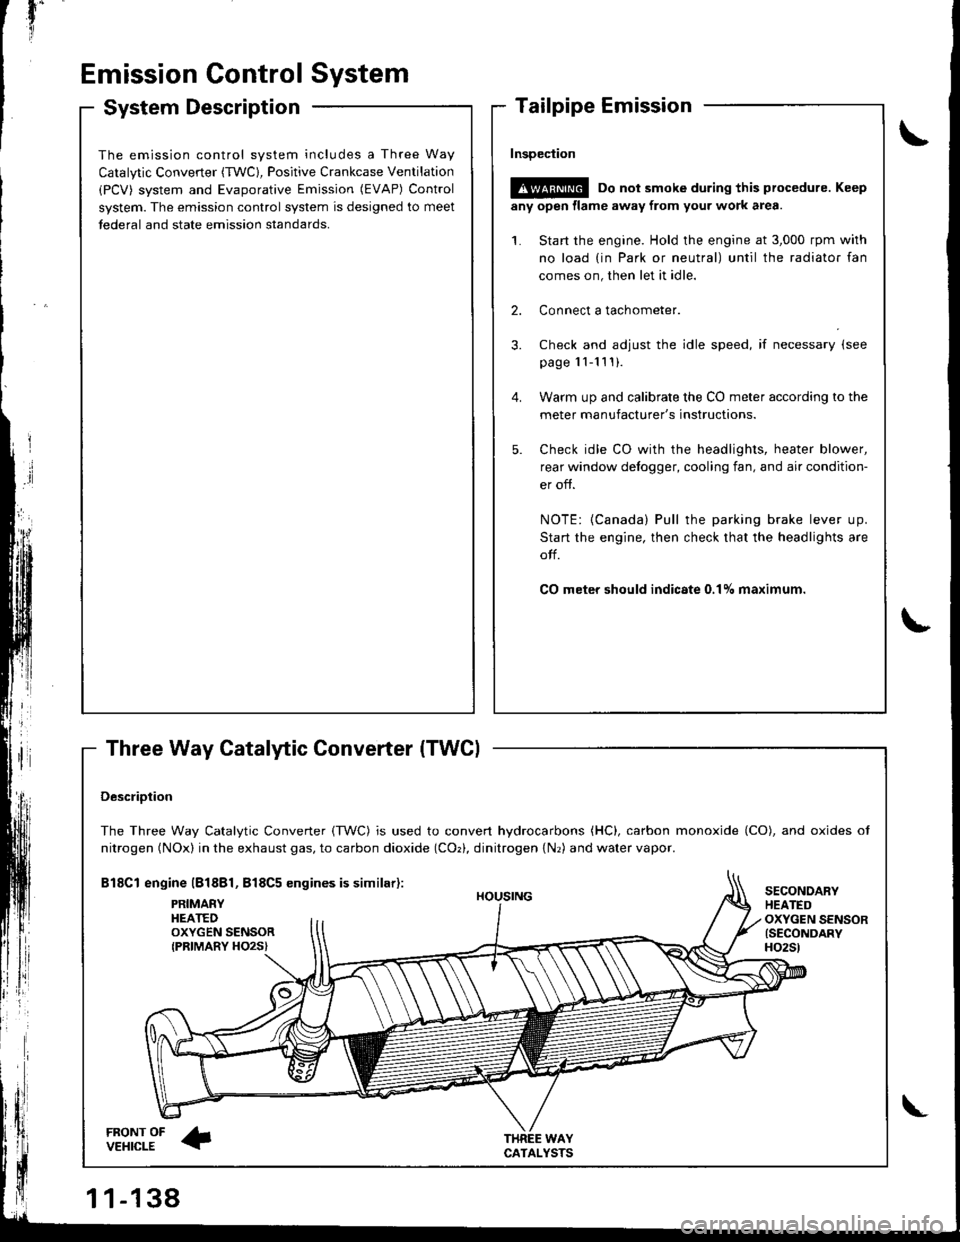 HONDA INTEGRA 1998 4.G Workshop Manual t"iI
Emission Gontrol System
System Description
Three Way Catalytic Converter (TWCI
\
t
The emission control system includes a Three Way
Catalytic Converter (TWC), Positive Crankcase Ventilation
(PCV)